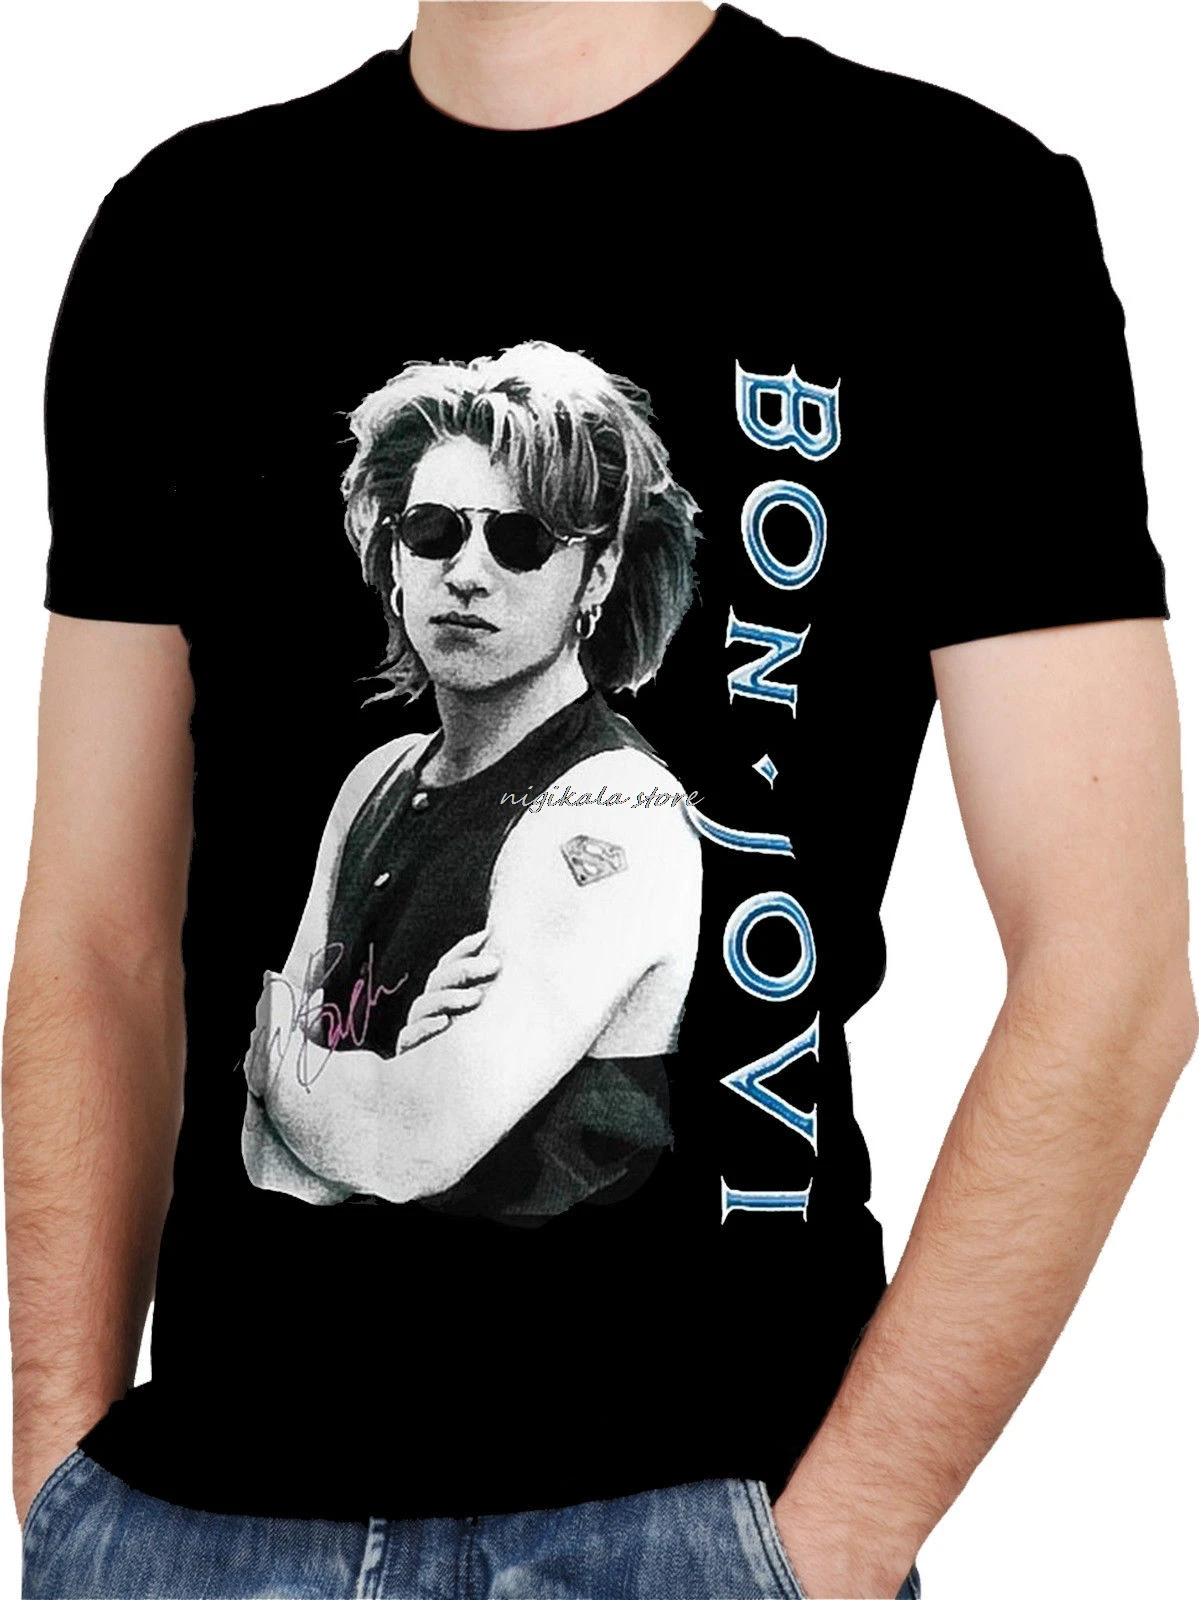 

BON JOVI Black New T-shirt Rock T Shirt Rock Band Shirt Rock Tee Good Quality Brand Summer Style Cool Top Tee